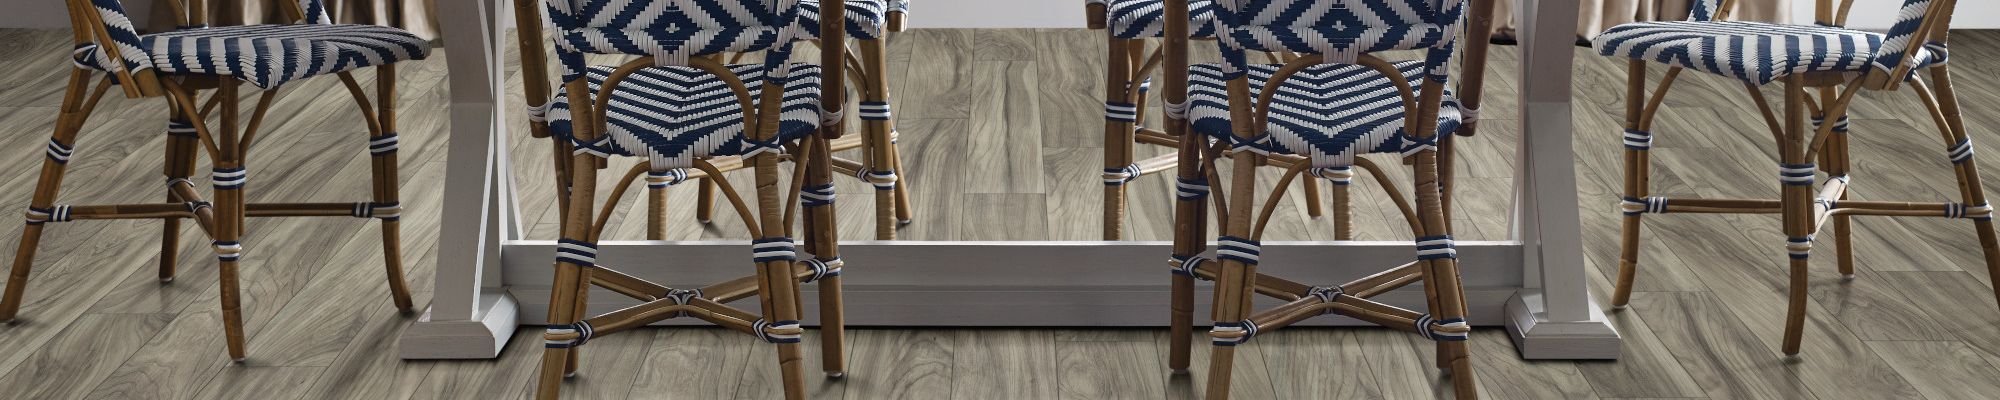 Dining room with Repel Laminate flooring - Wood-look laminate flooring from Capitol Carpet in Dalton, GA